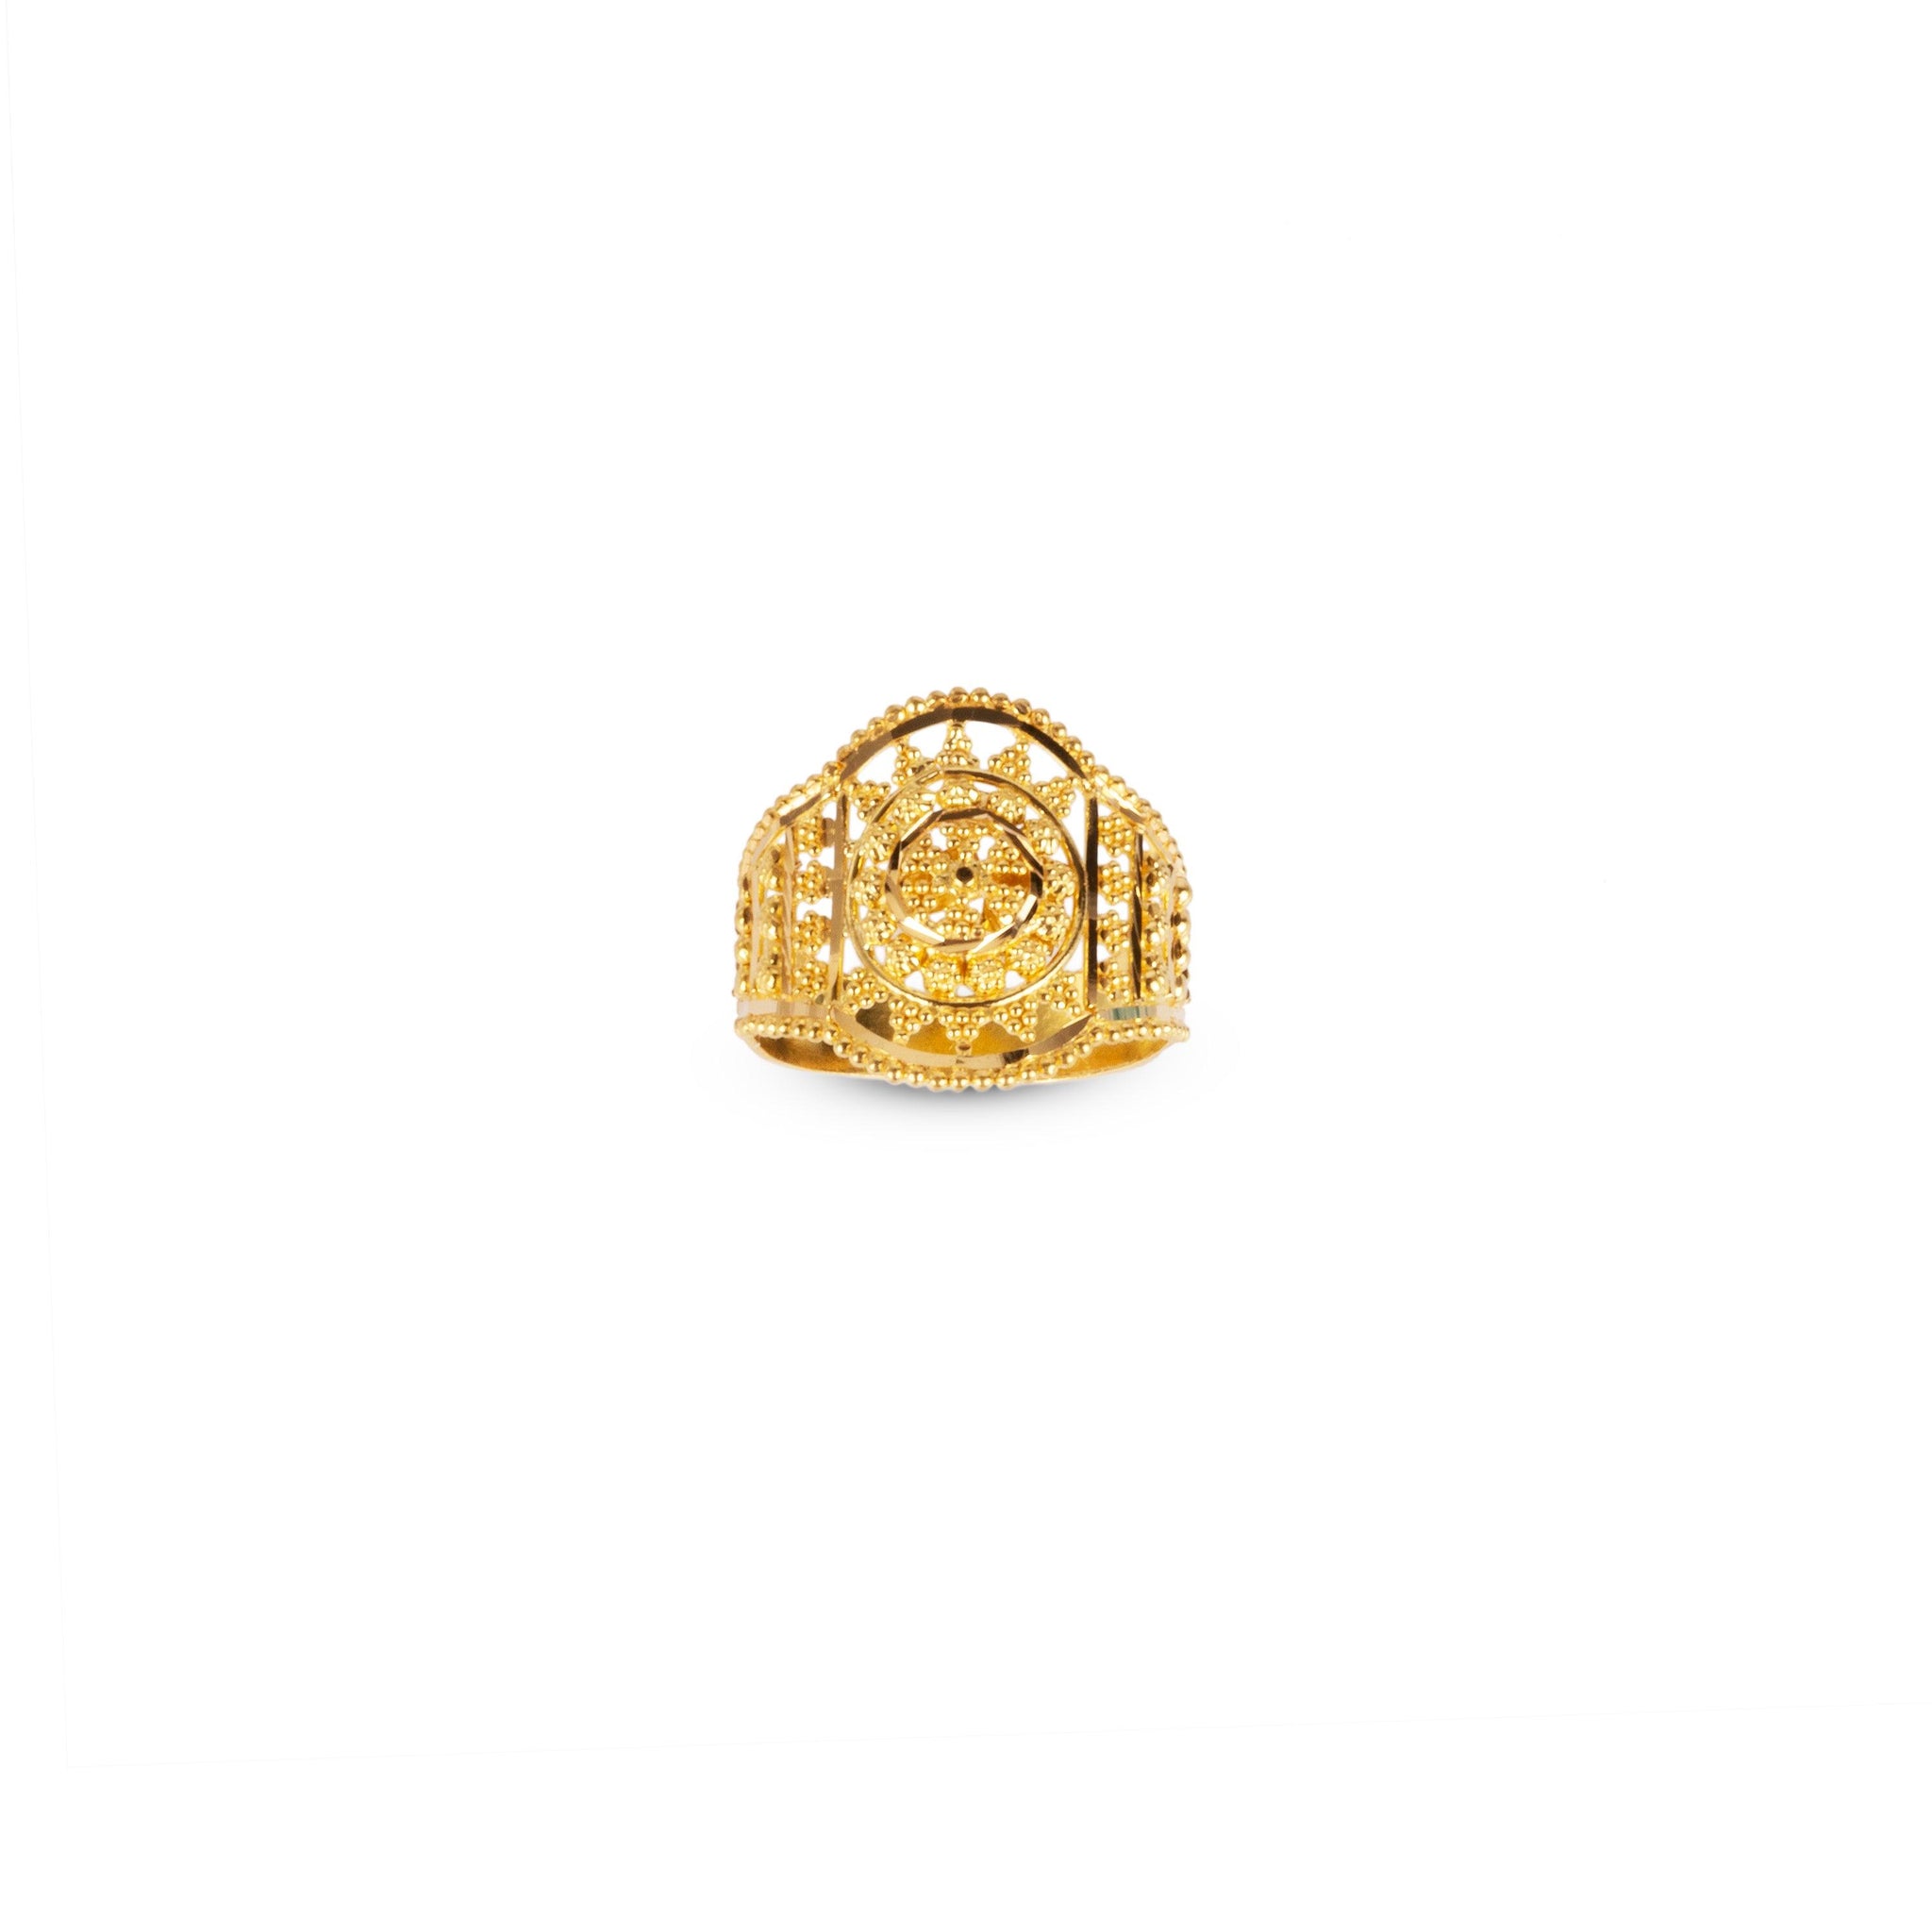 22ct Gold Filigree Ring (4.0g) LR-6637